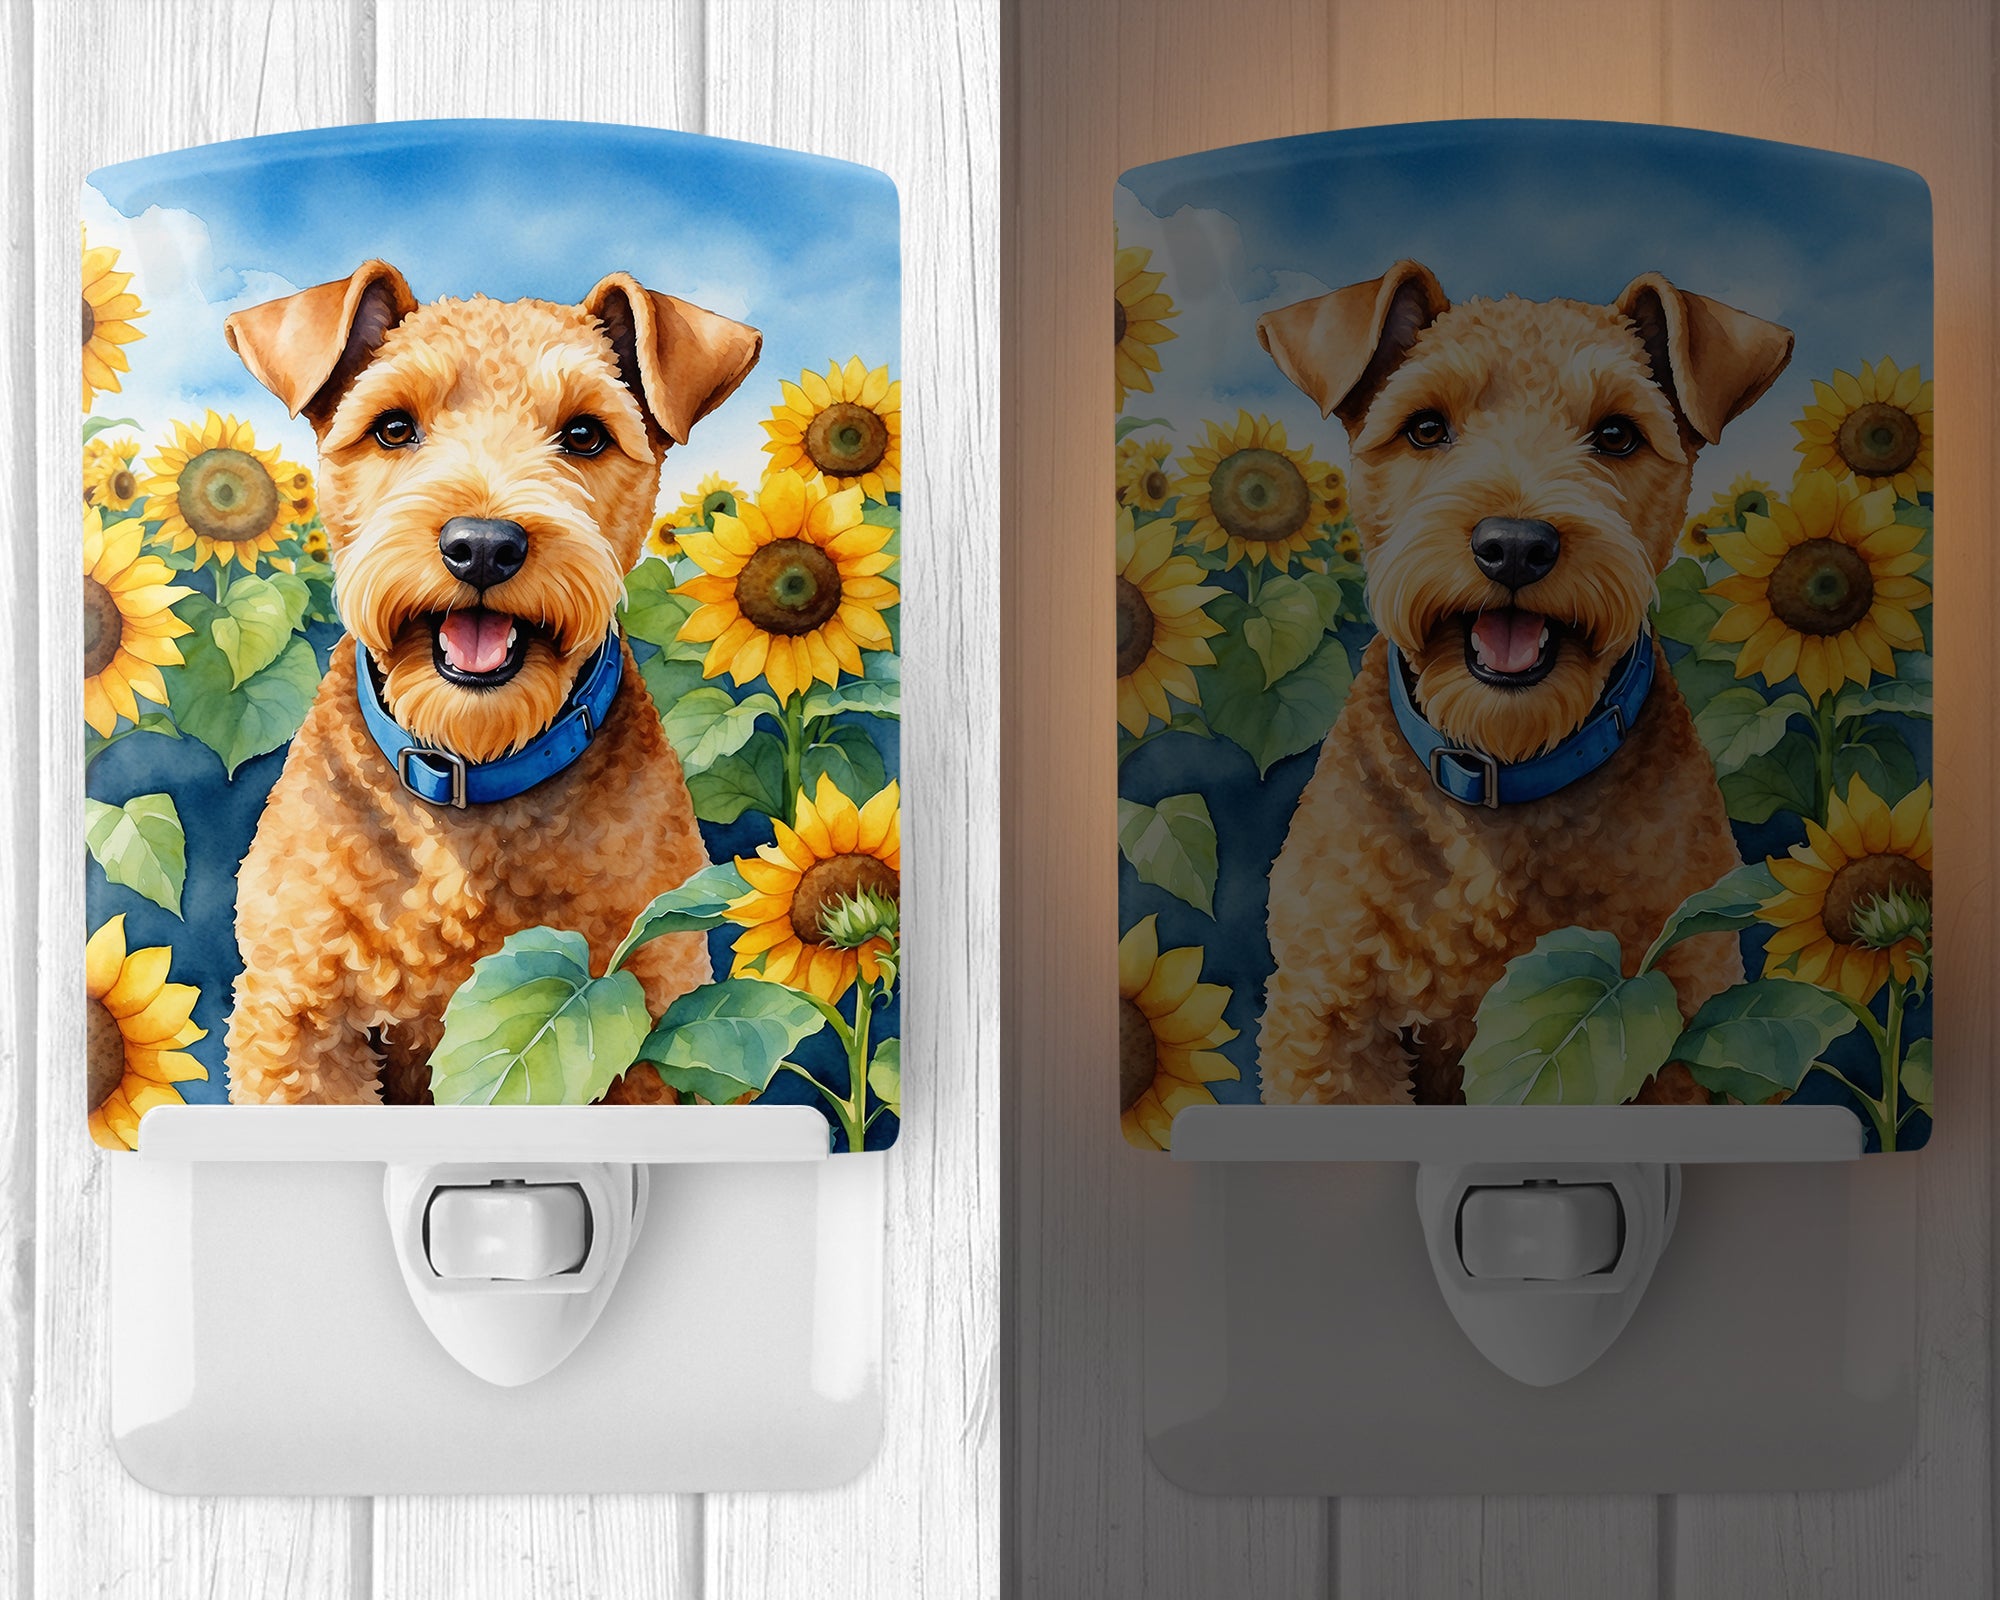 Buy this Lakeland Terrier in Sunflowers Ceramic Night Light